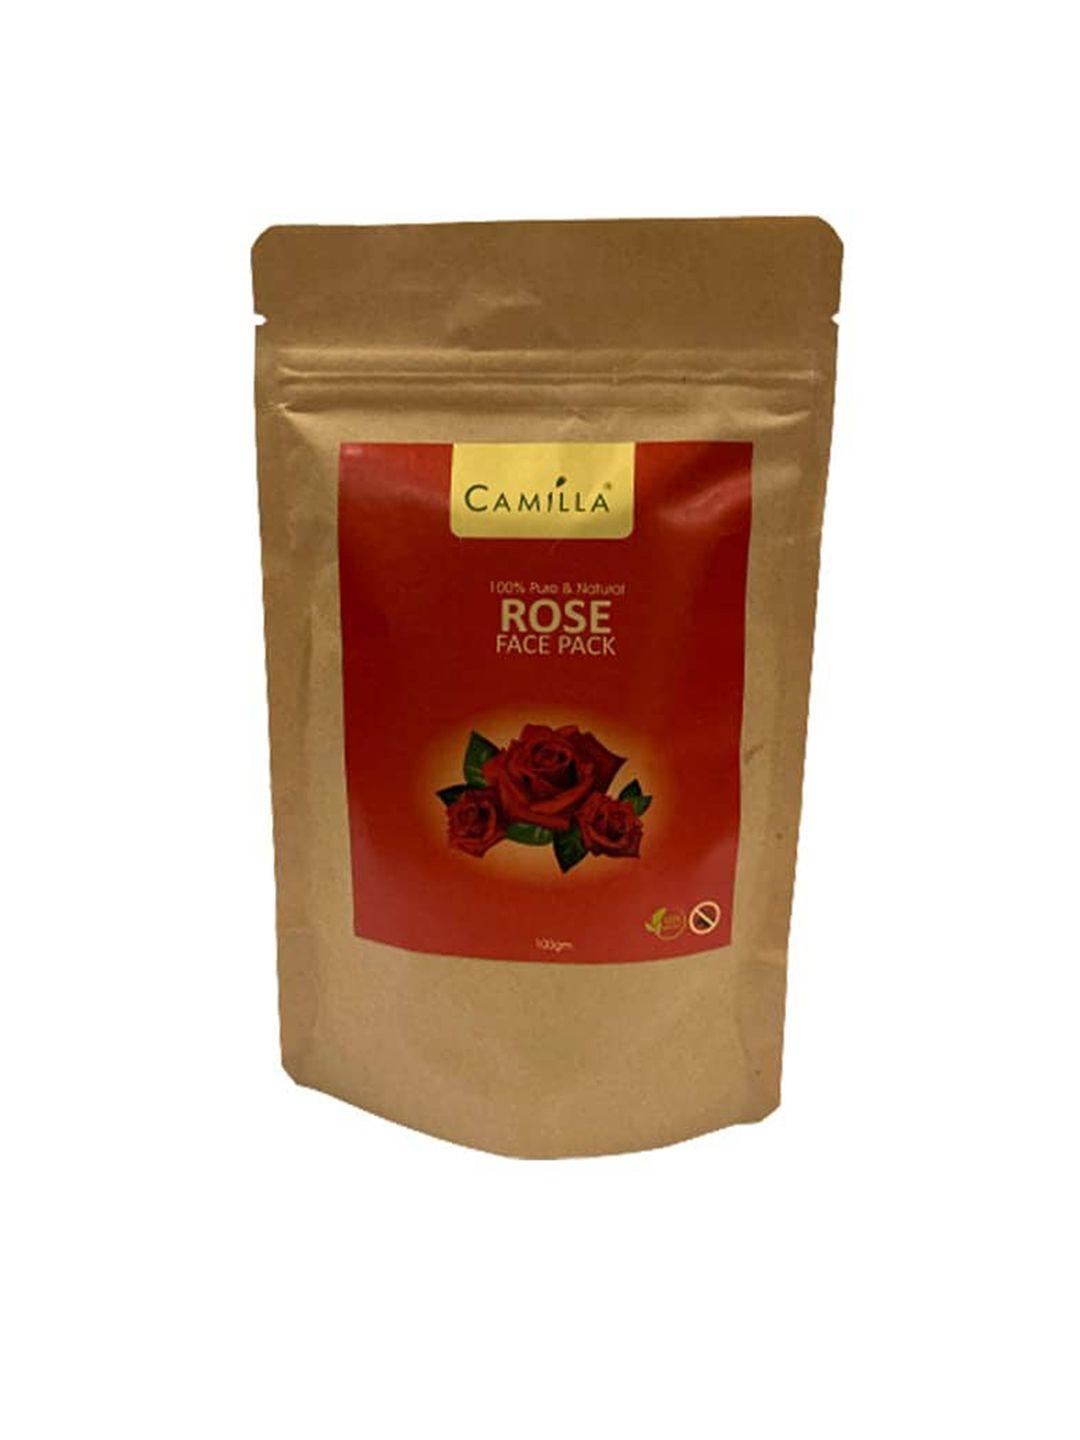 camilla 100% pure & natural rose face pack - 100 g